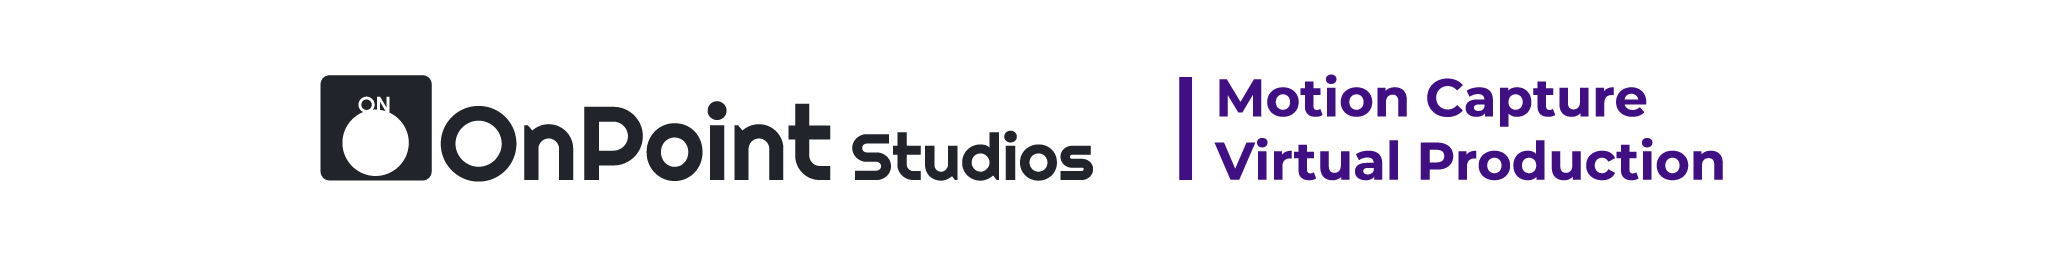 OnPoint Studios Logo